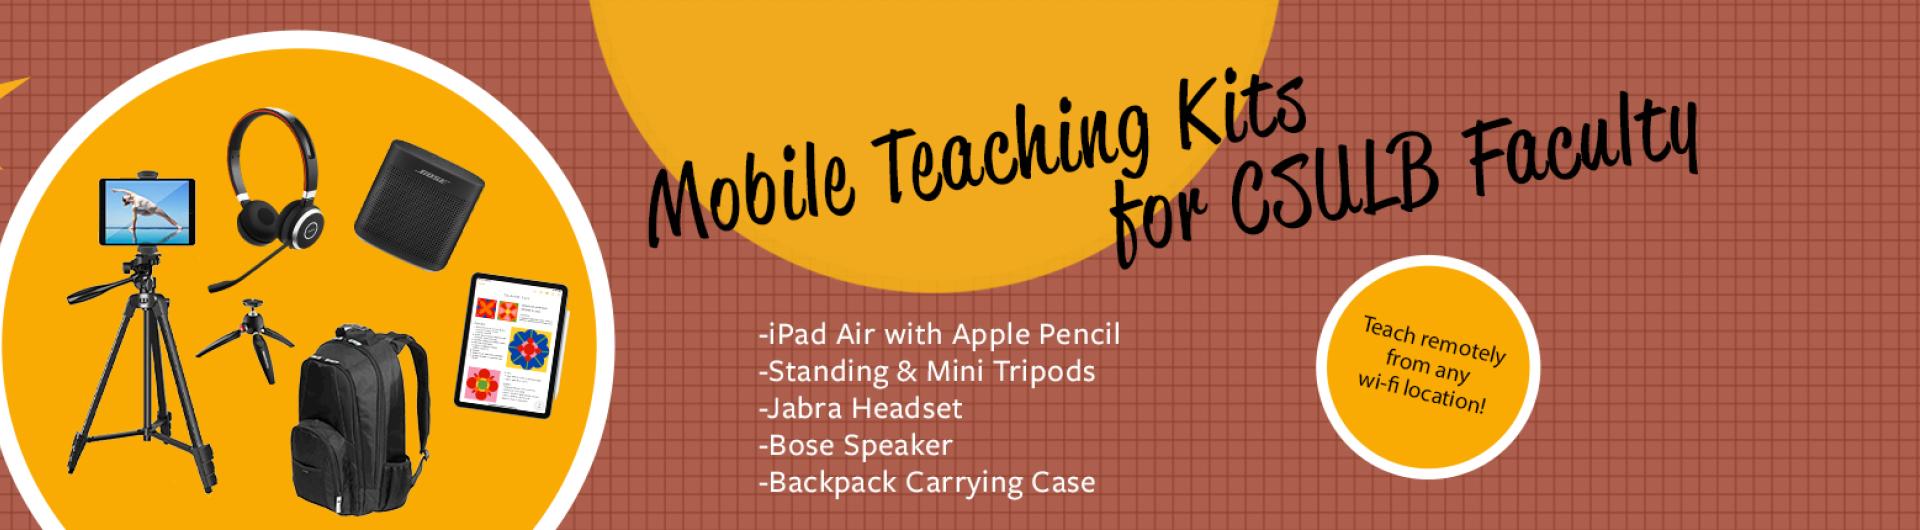 mobile teaching kits